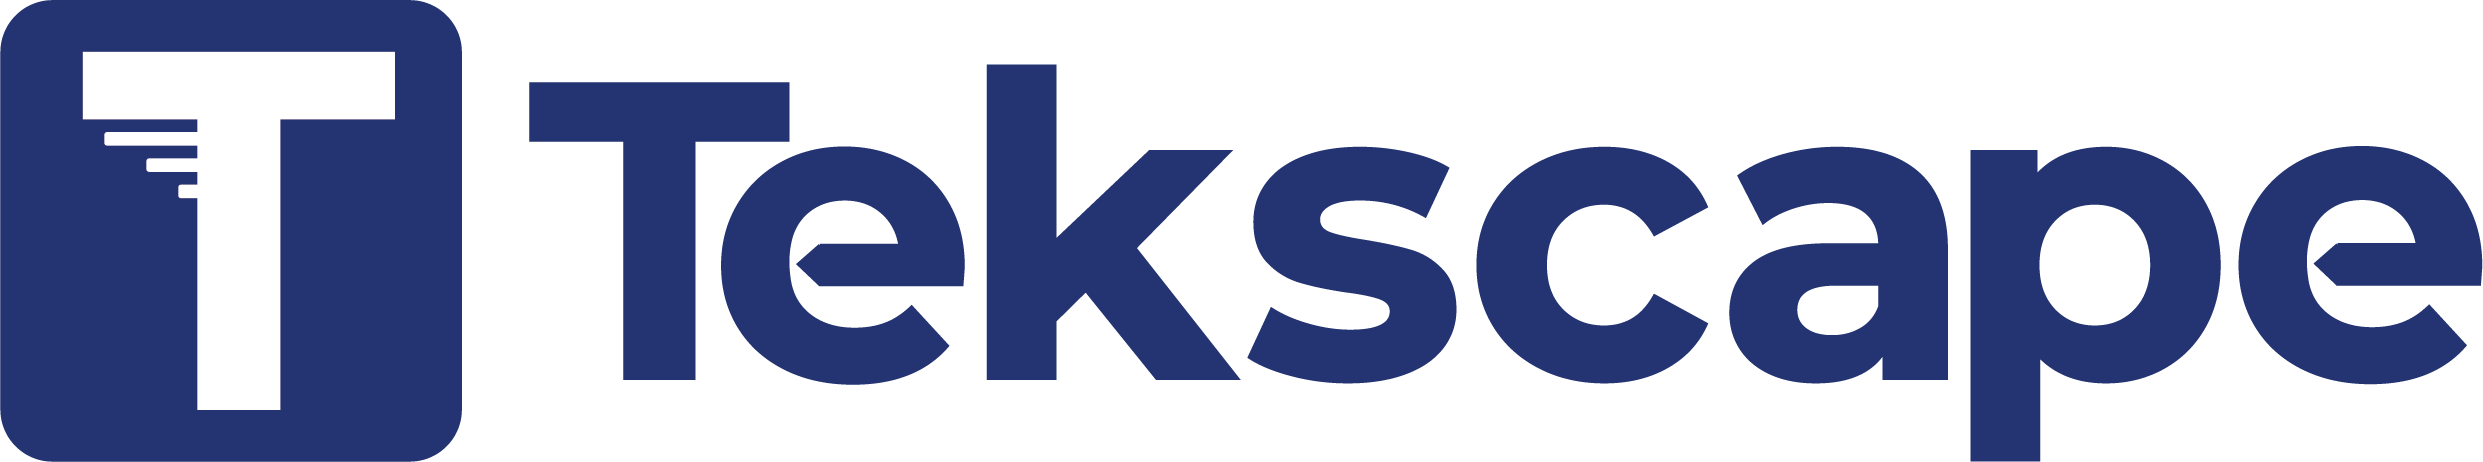 Tekscape Logo - Blue 0A2E75-4